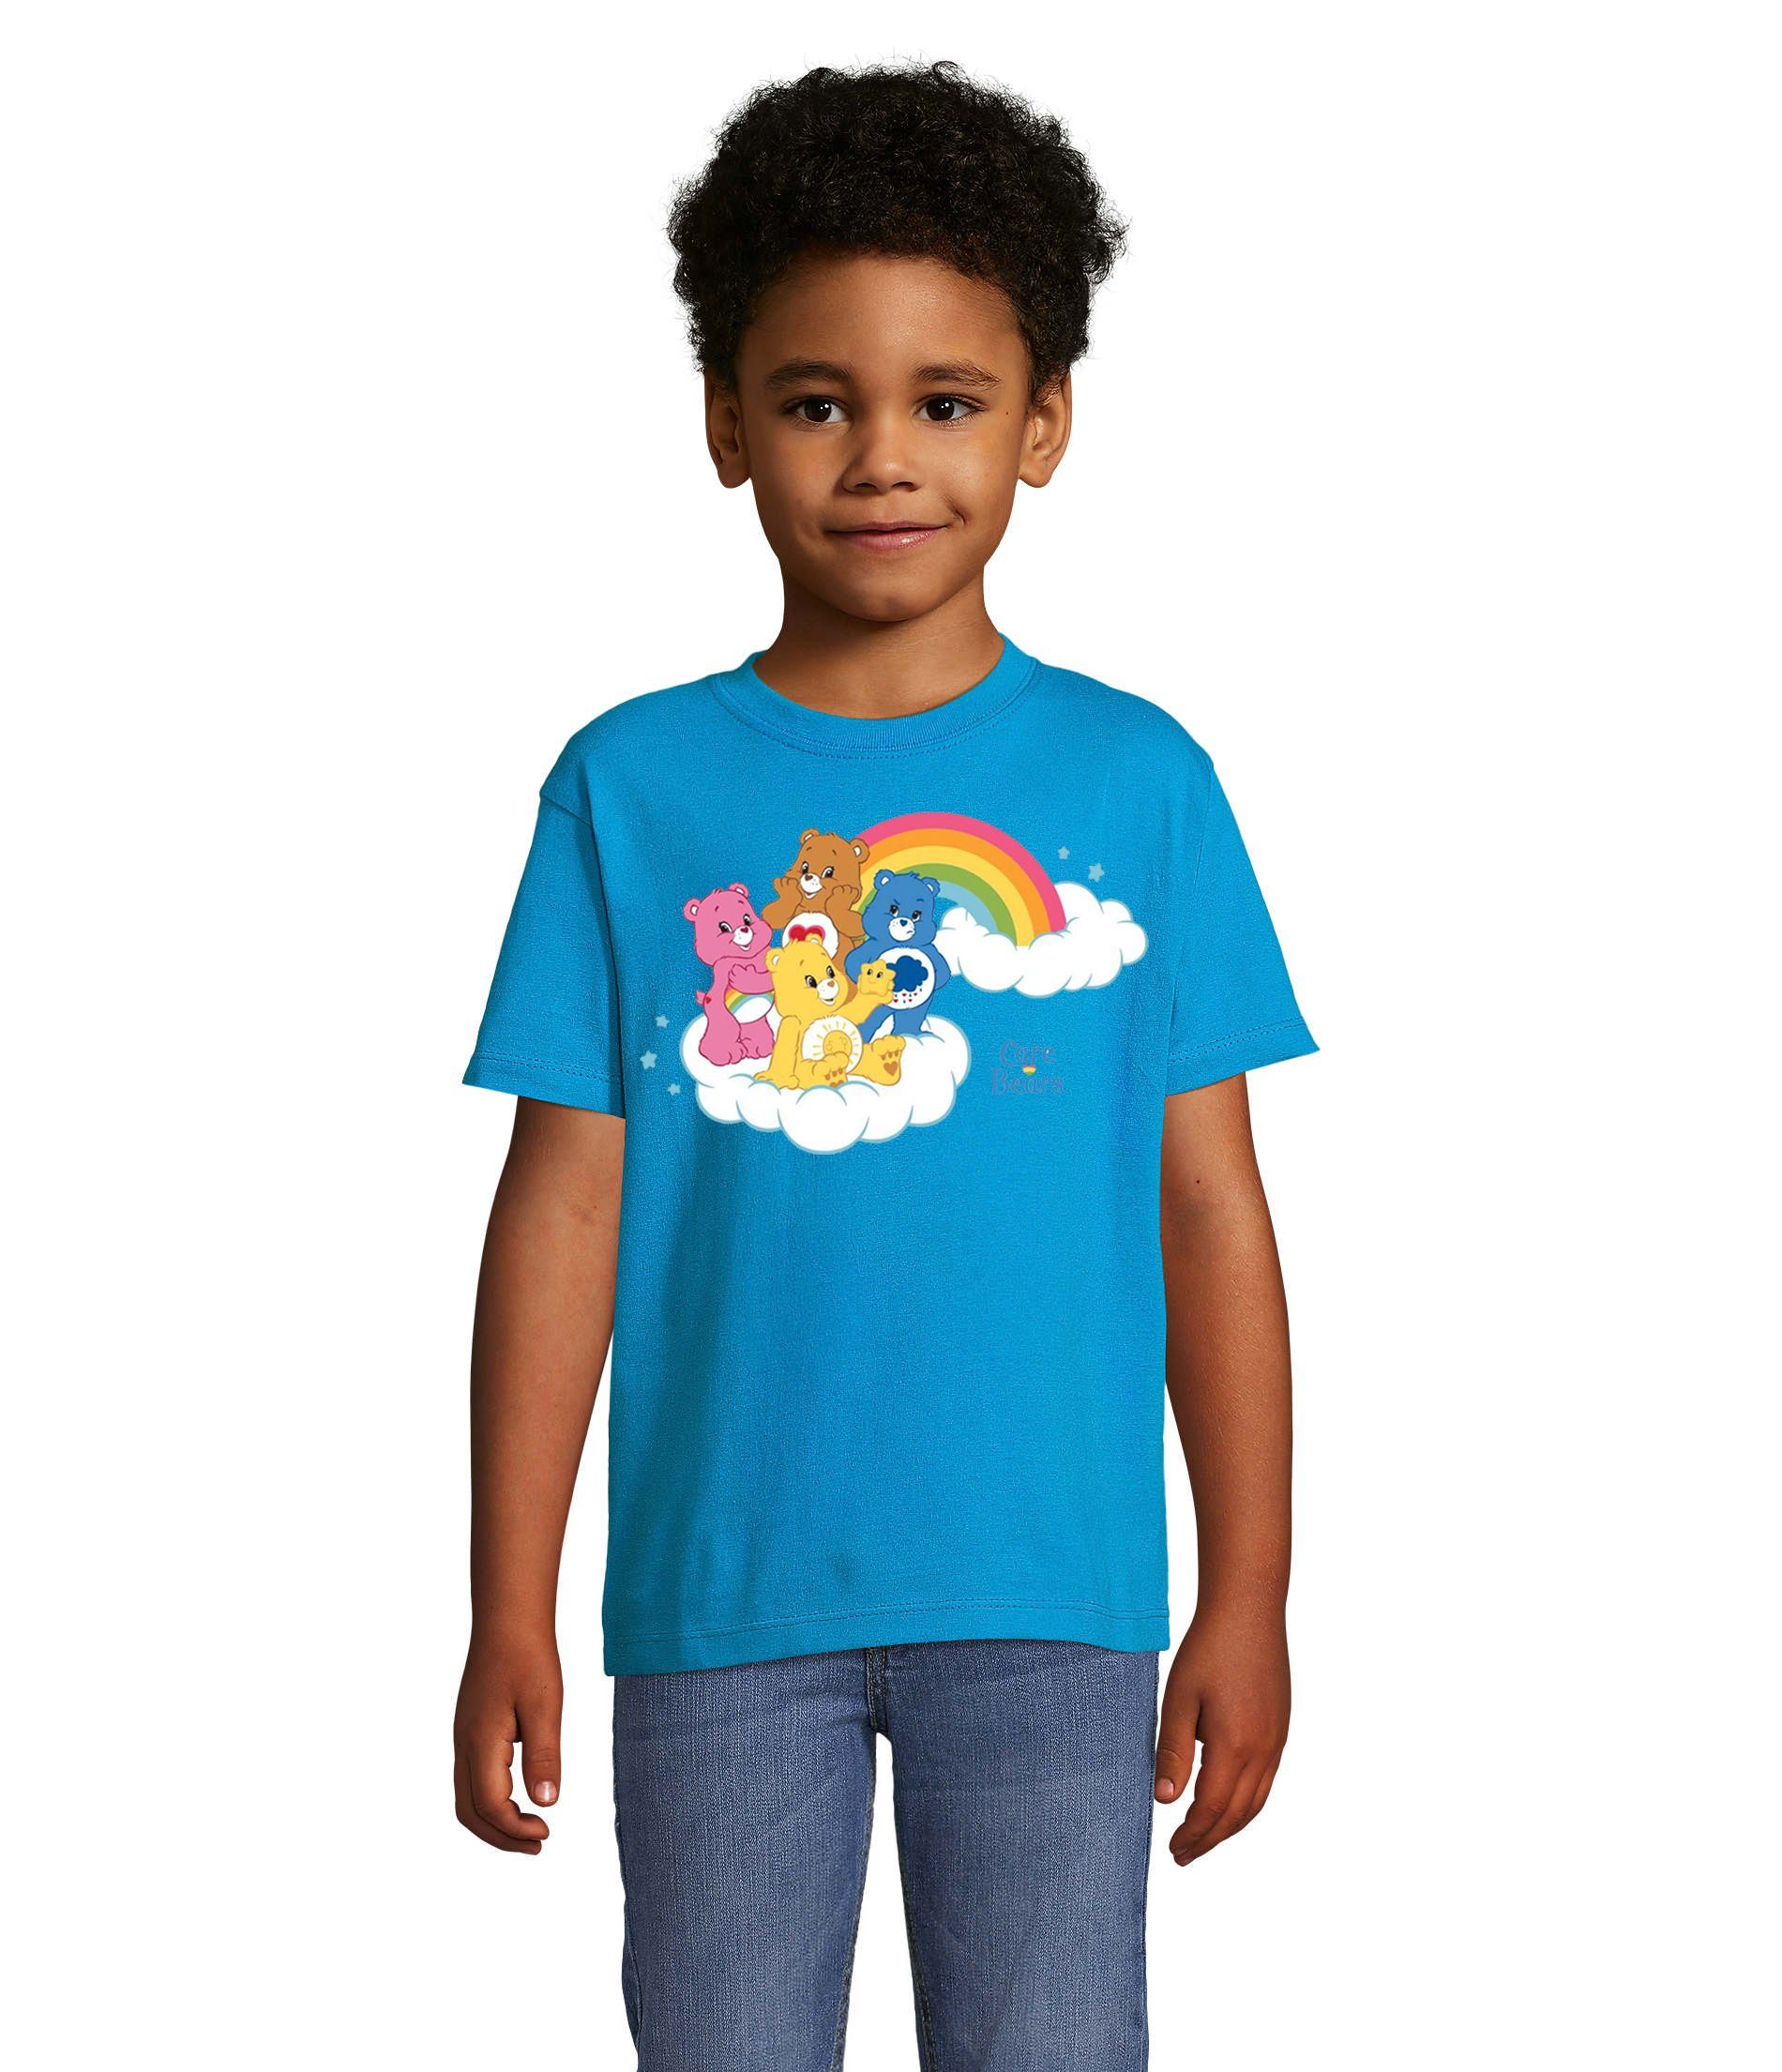 Wolkenland & T-Shirt Glücksbärchis Kinder Bärchis Blau Brownie Blondie Care Bears Hab-Dich-lieb